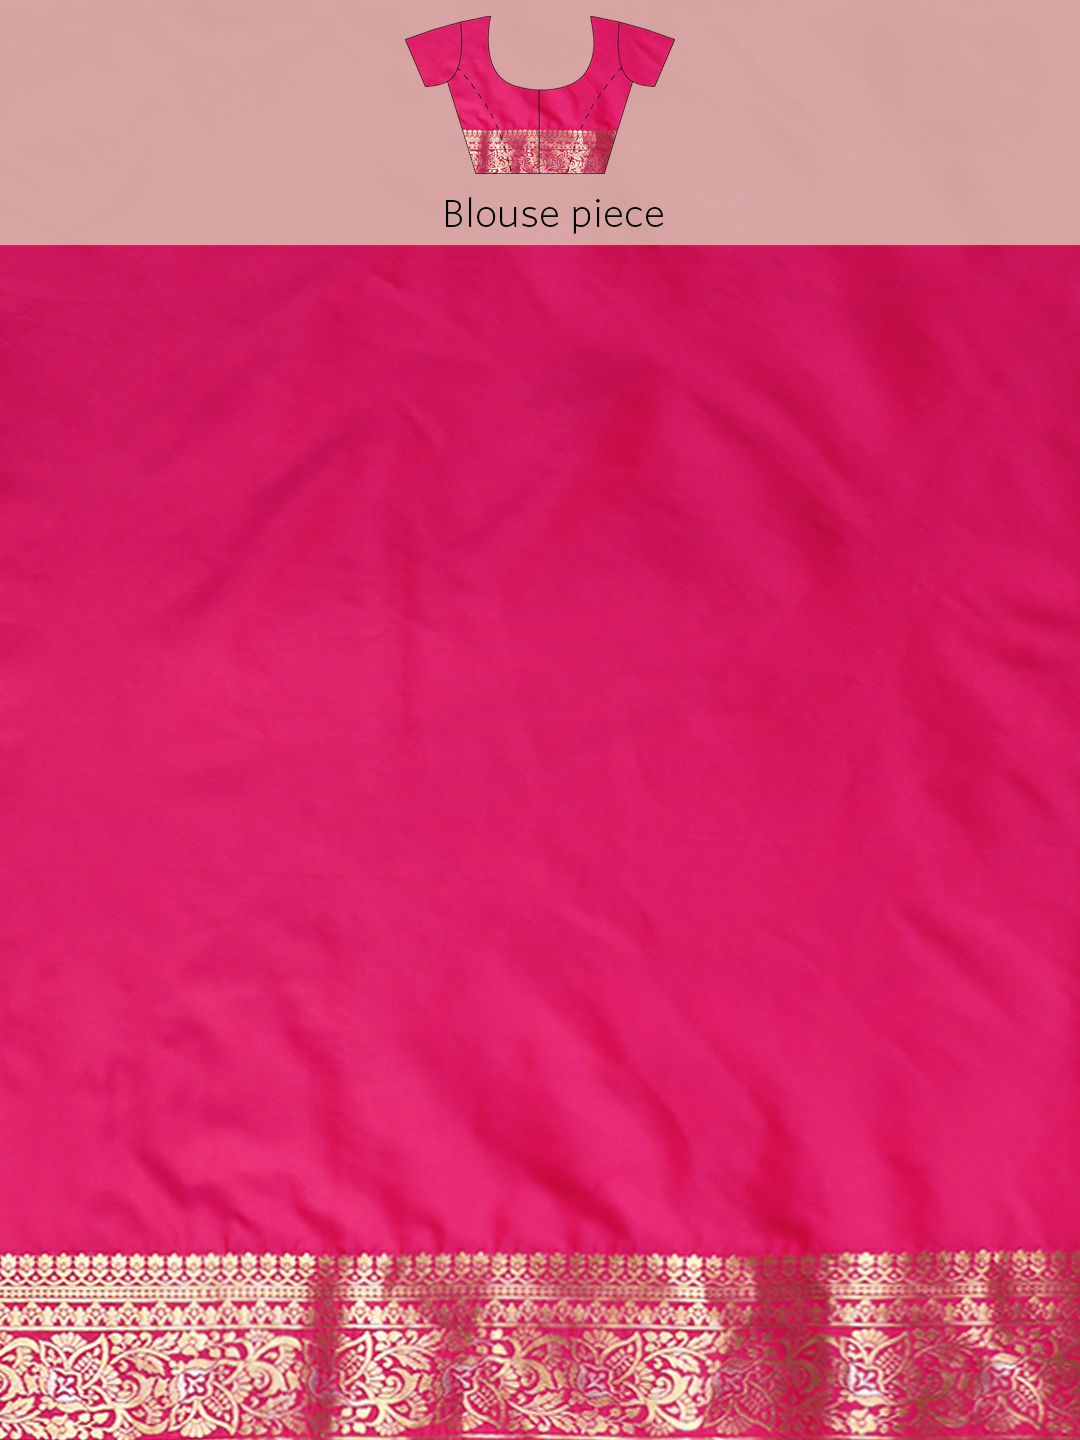 Pink Color Exclusive Banarasi Saree Design Silver and Gold Zari Weaving Work with Designer pallu